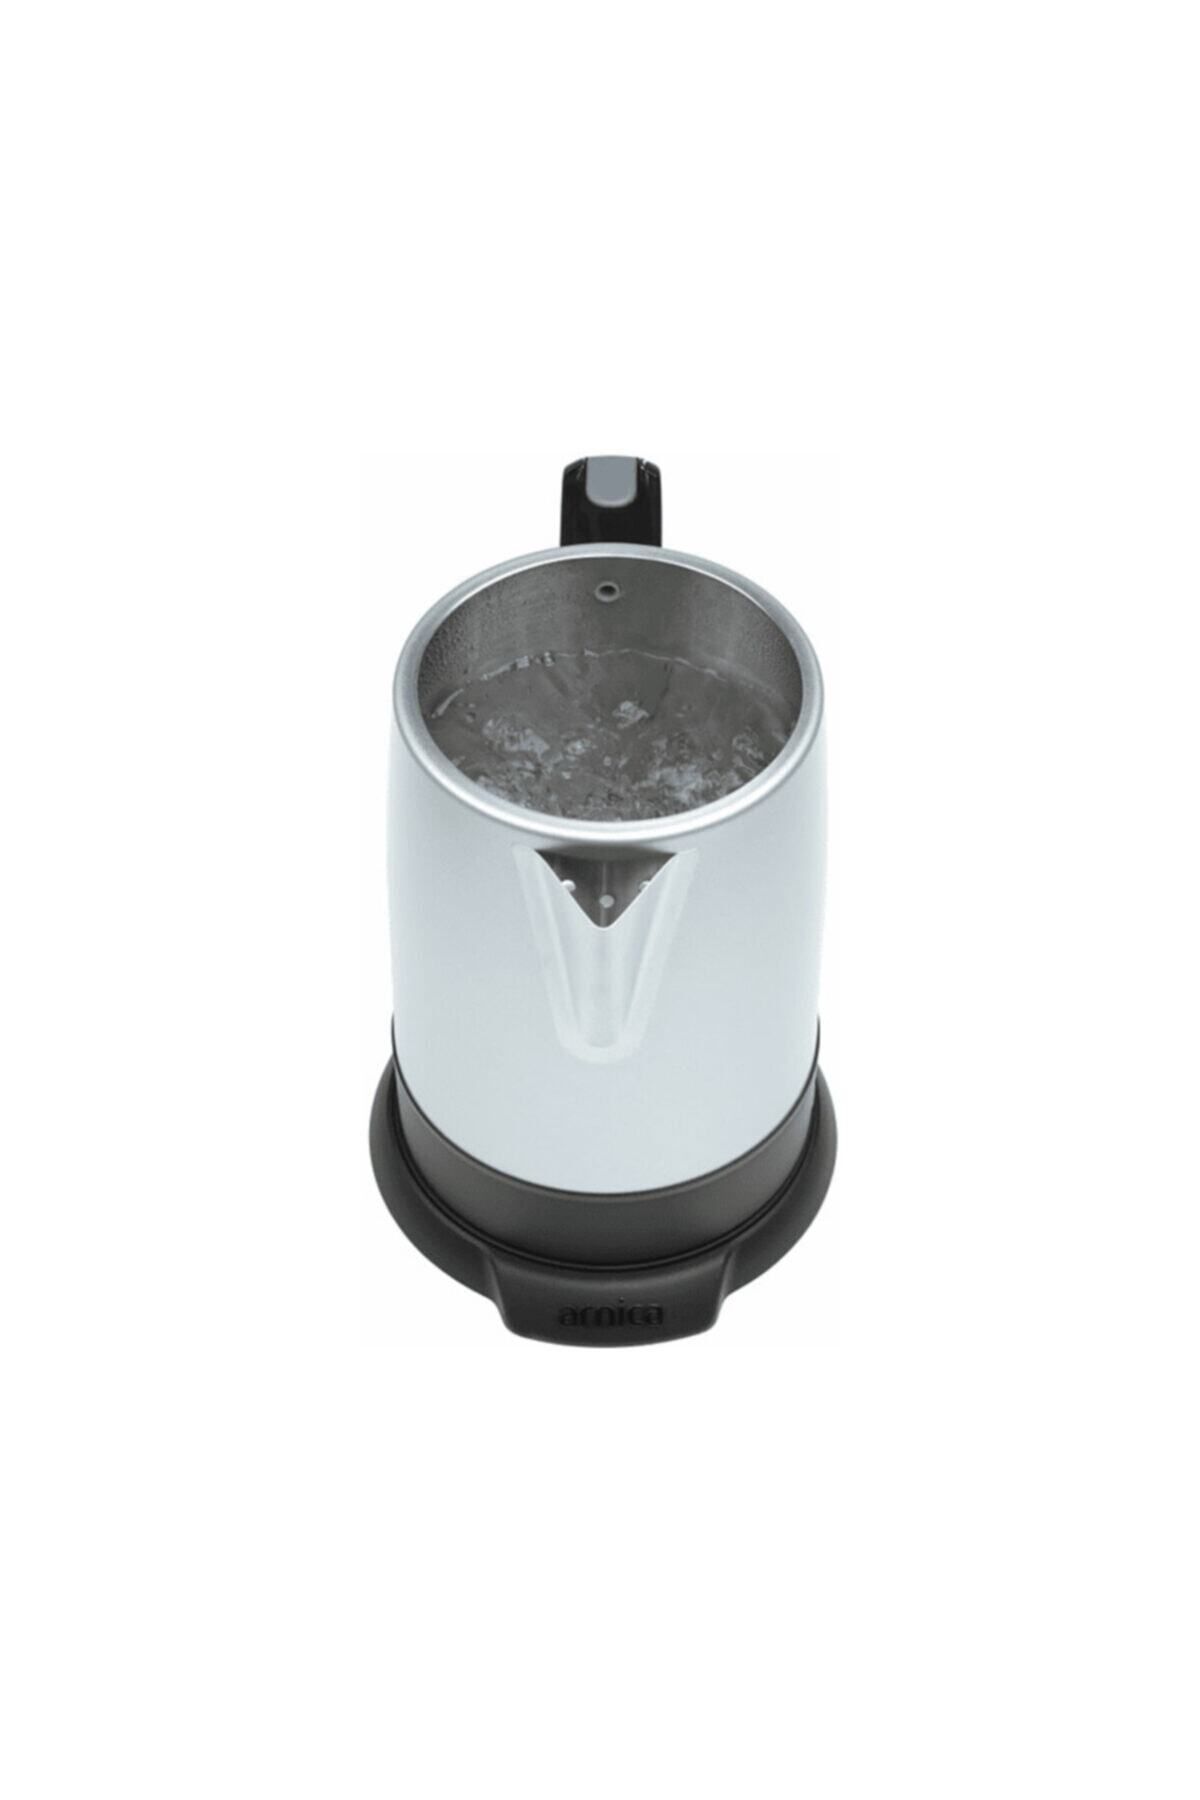 Arnica Ih33203 1800w Demli Stil Camlı Çay Makinesi Mint